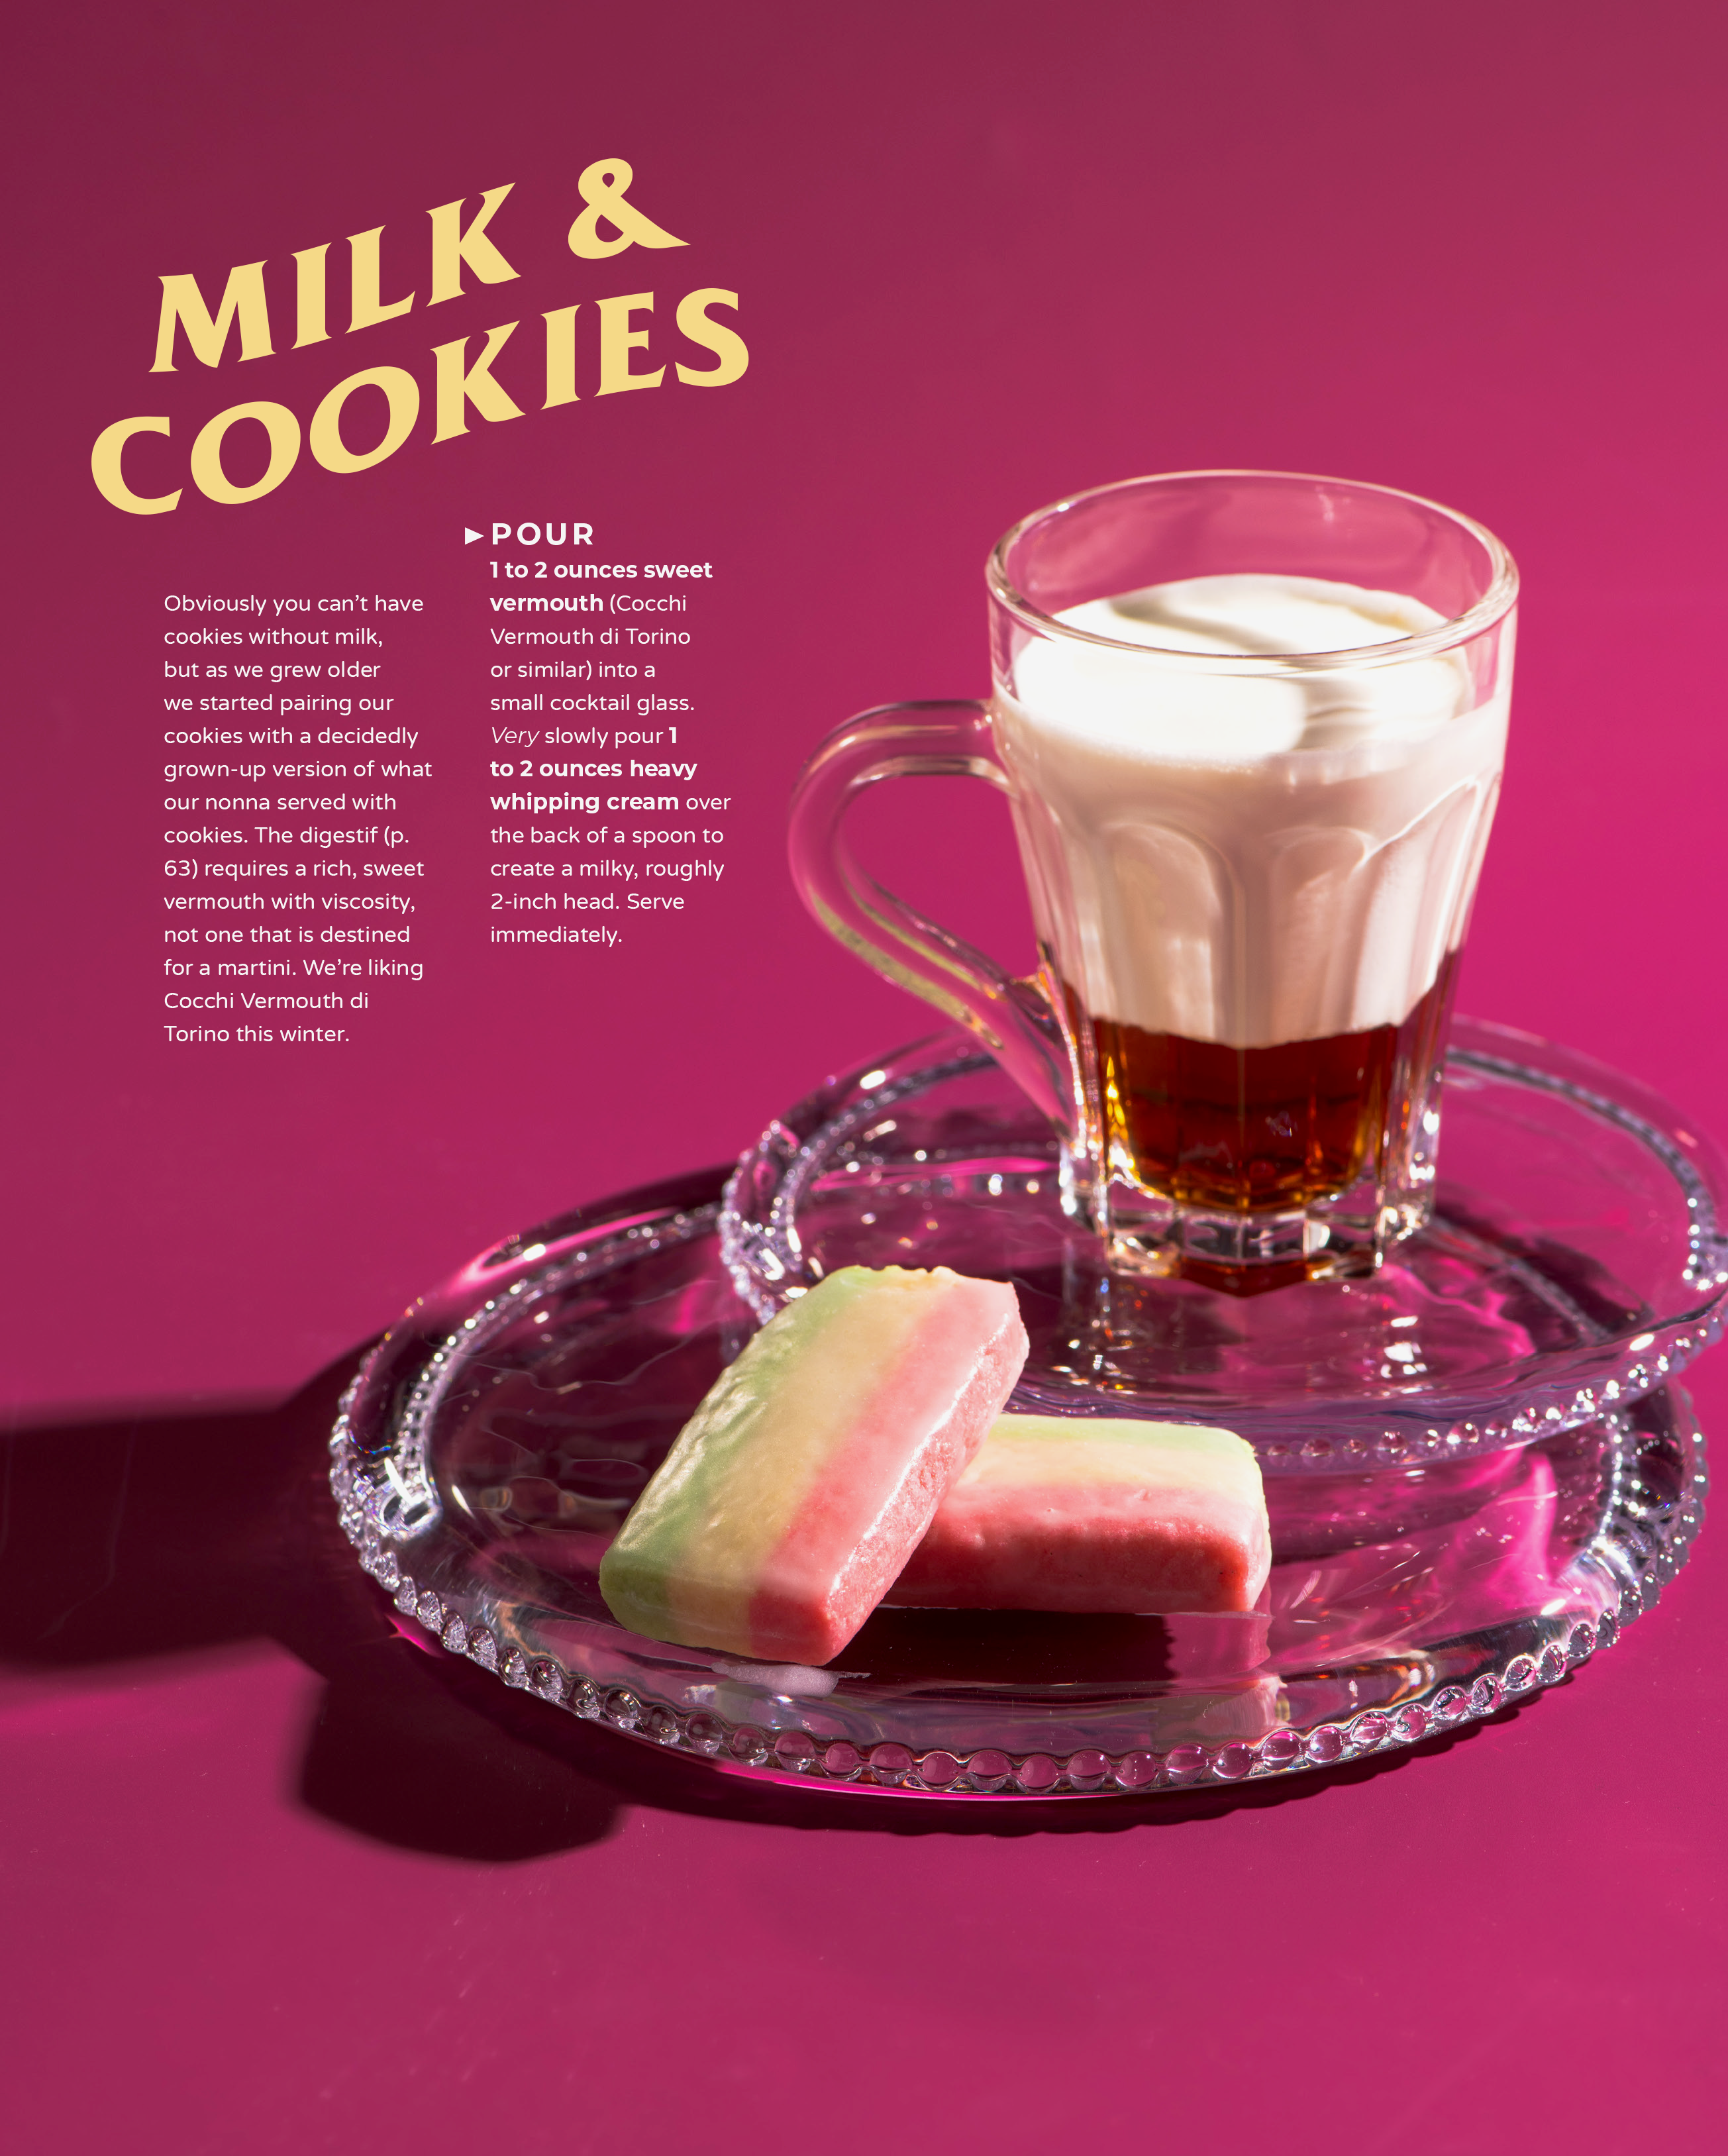 Milk and cookies Johanna Brannan Lowe Food and Prop Stylist | recipe developer New York